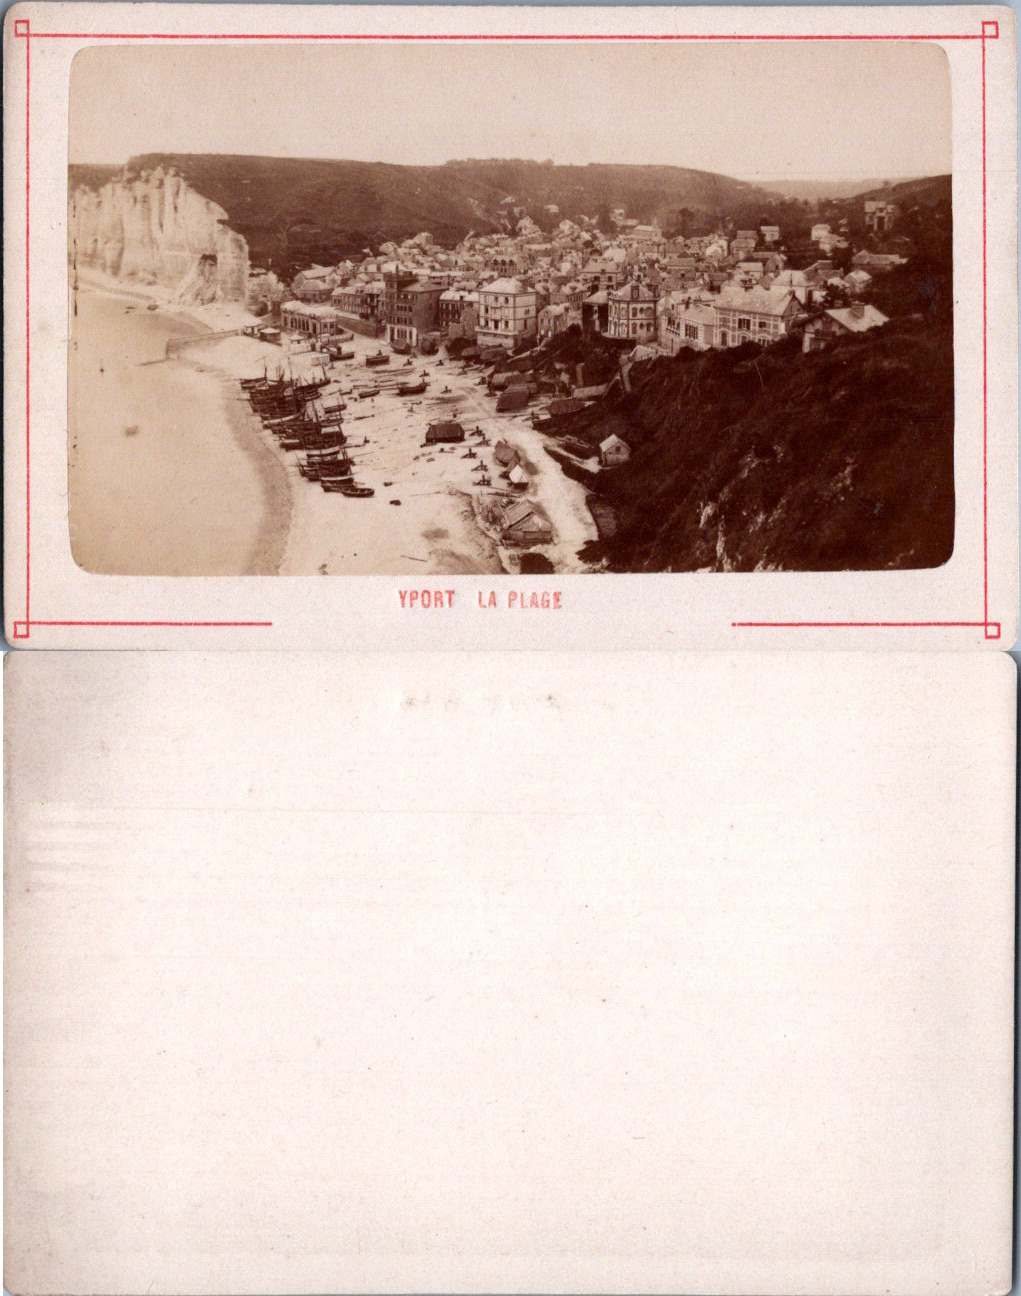 France, Normandy, Yport, the beach, villas and cliff, circa 1875 Vintage CDV al